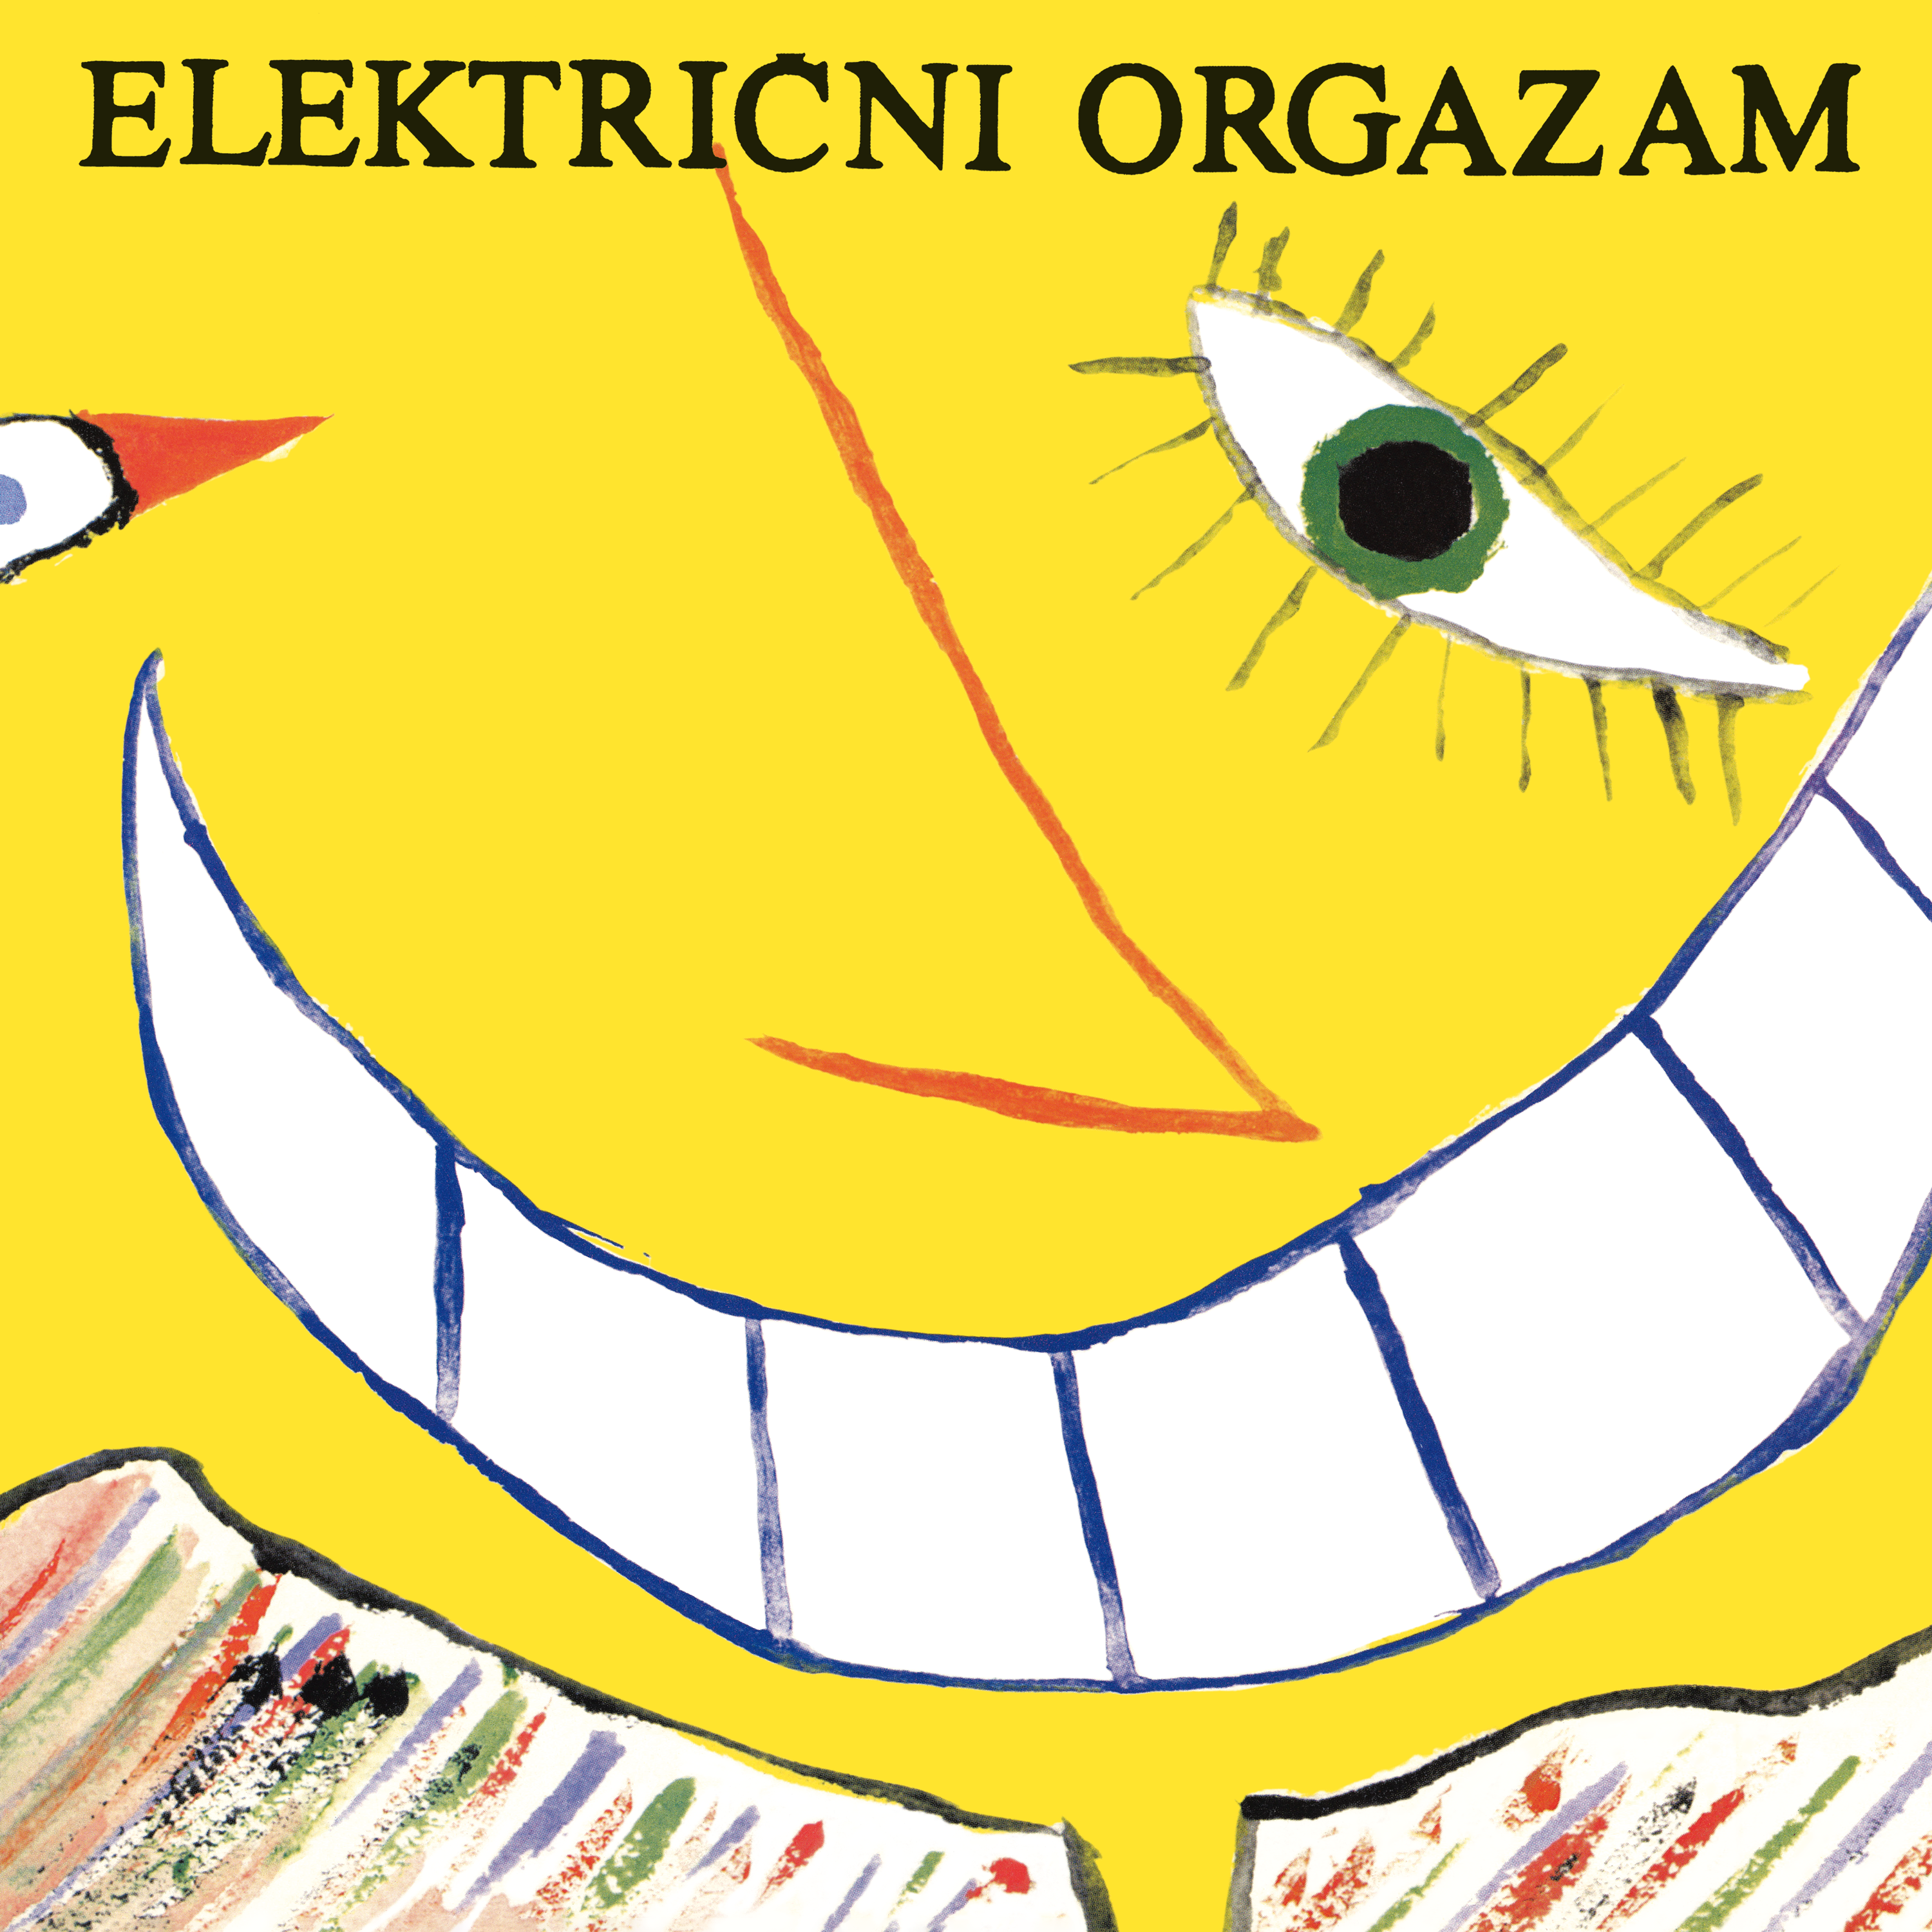 Luksuzno vinilno reizdanje albuma Električnog orgazma “Les Chansones Populaires”  od danas u prodaji